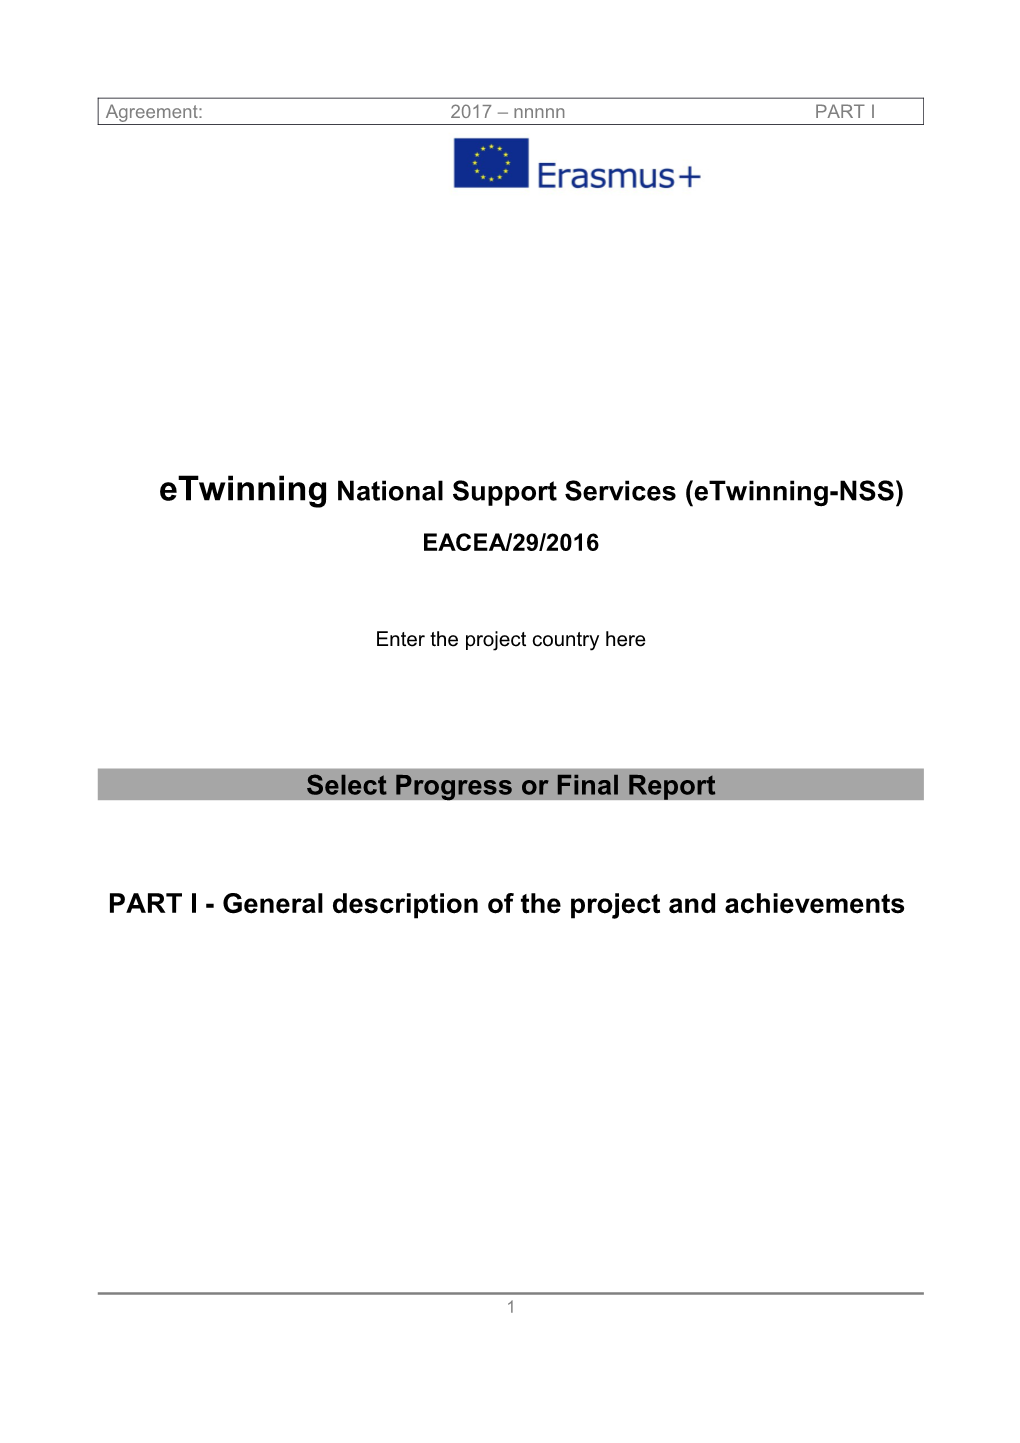 Etwinning National Support Services (Etwinning-NSS)